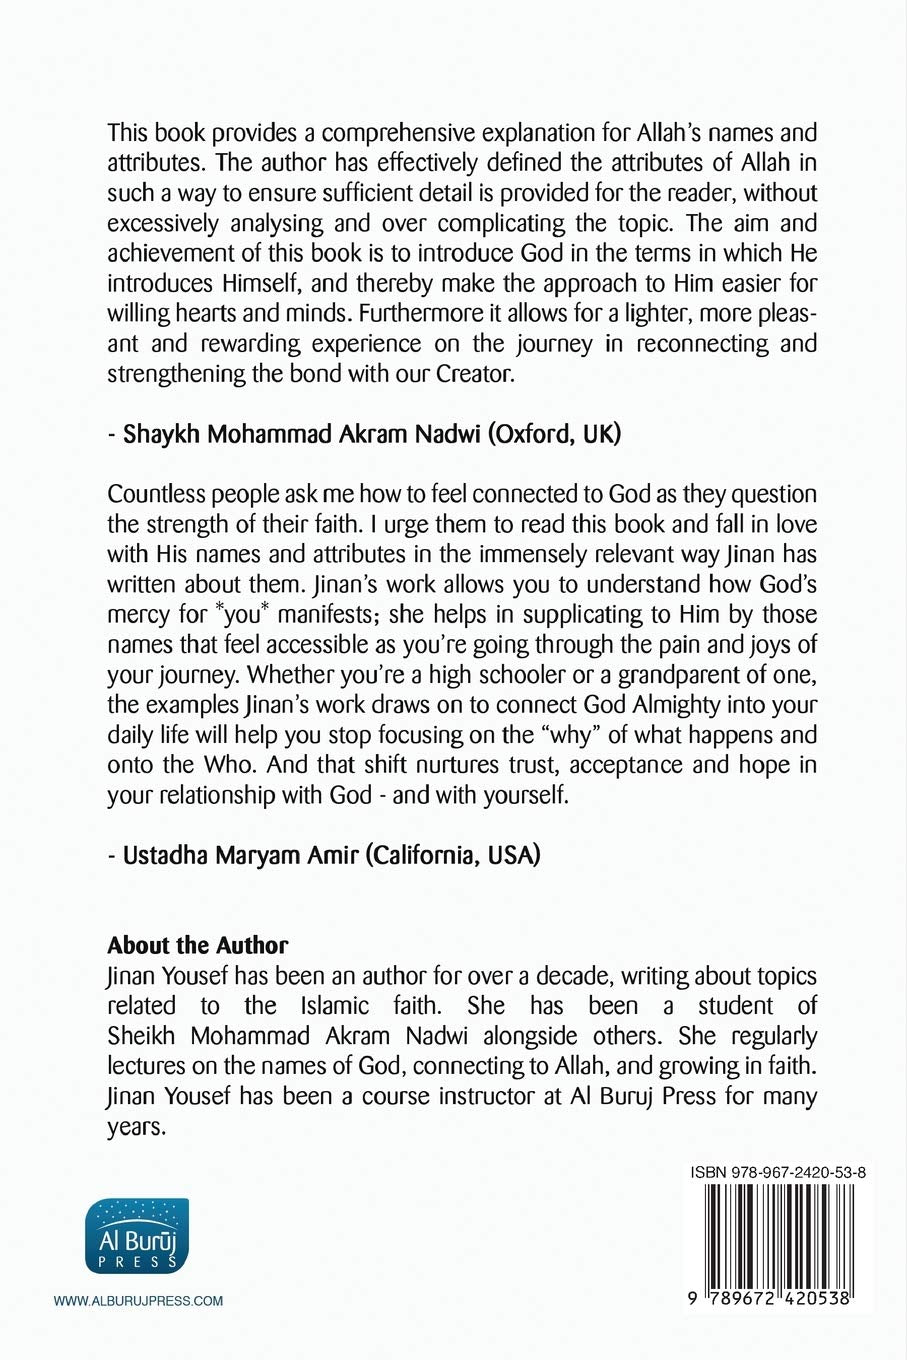 Reflecting on the Names of Allah - Jinan Yousef